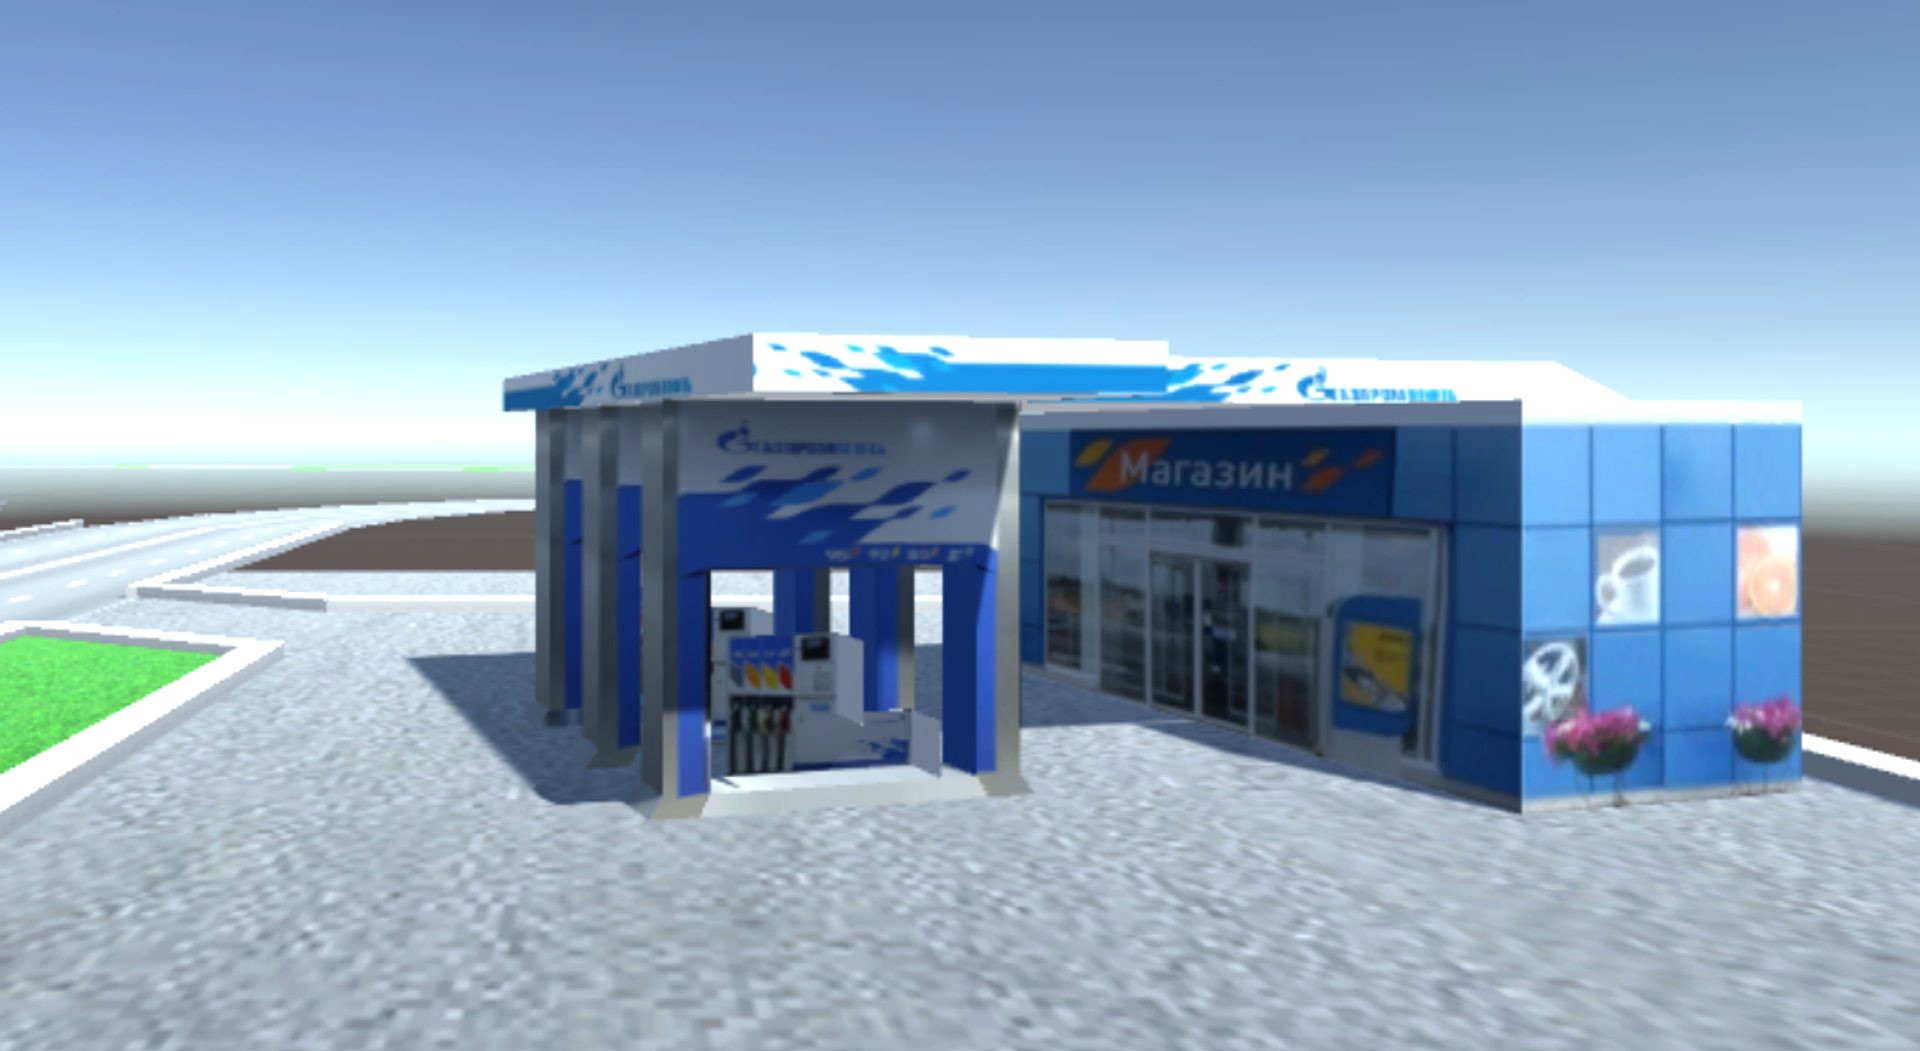 Fueling station